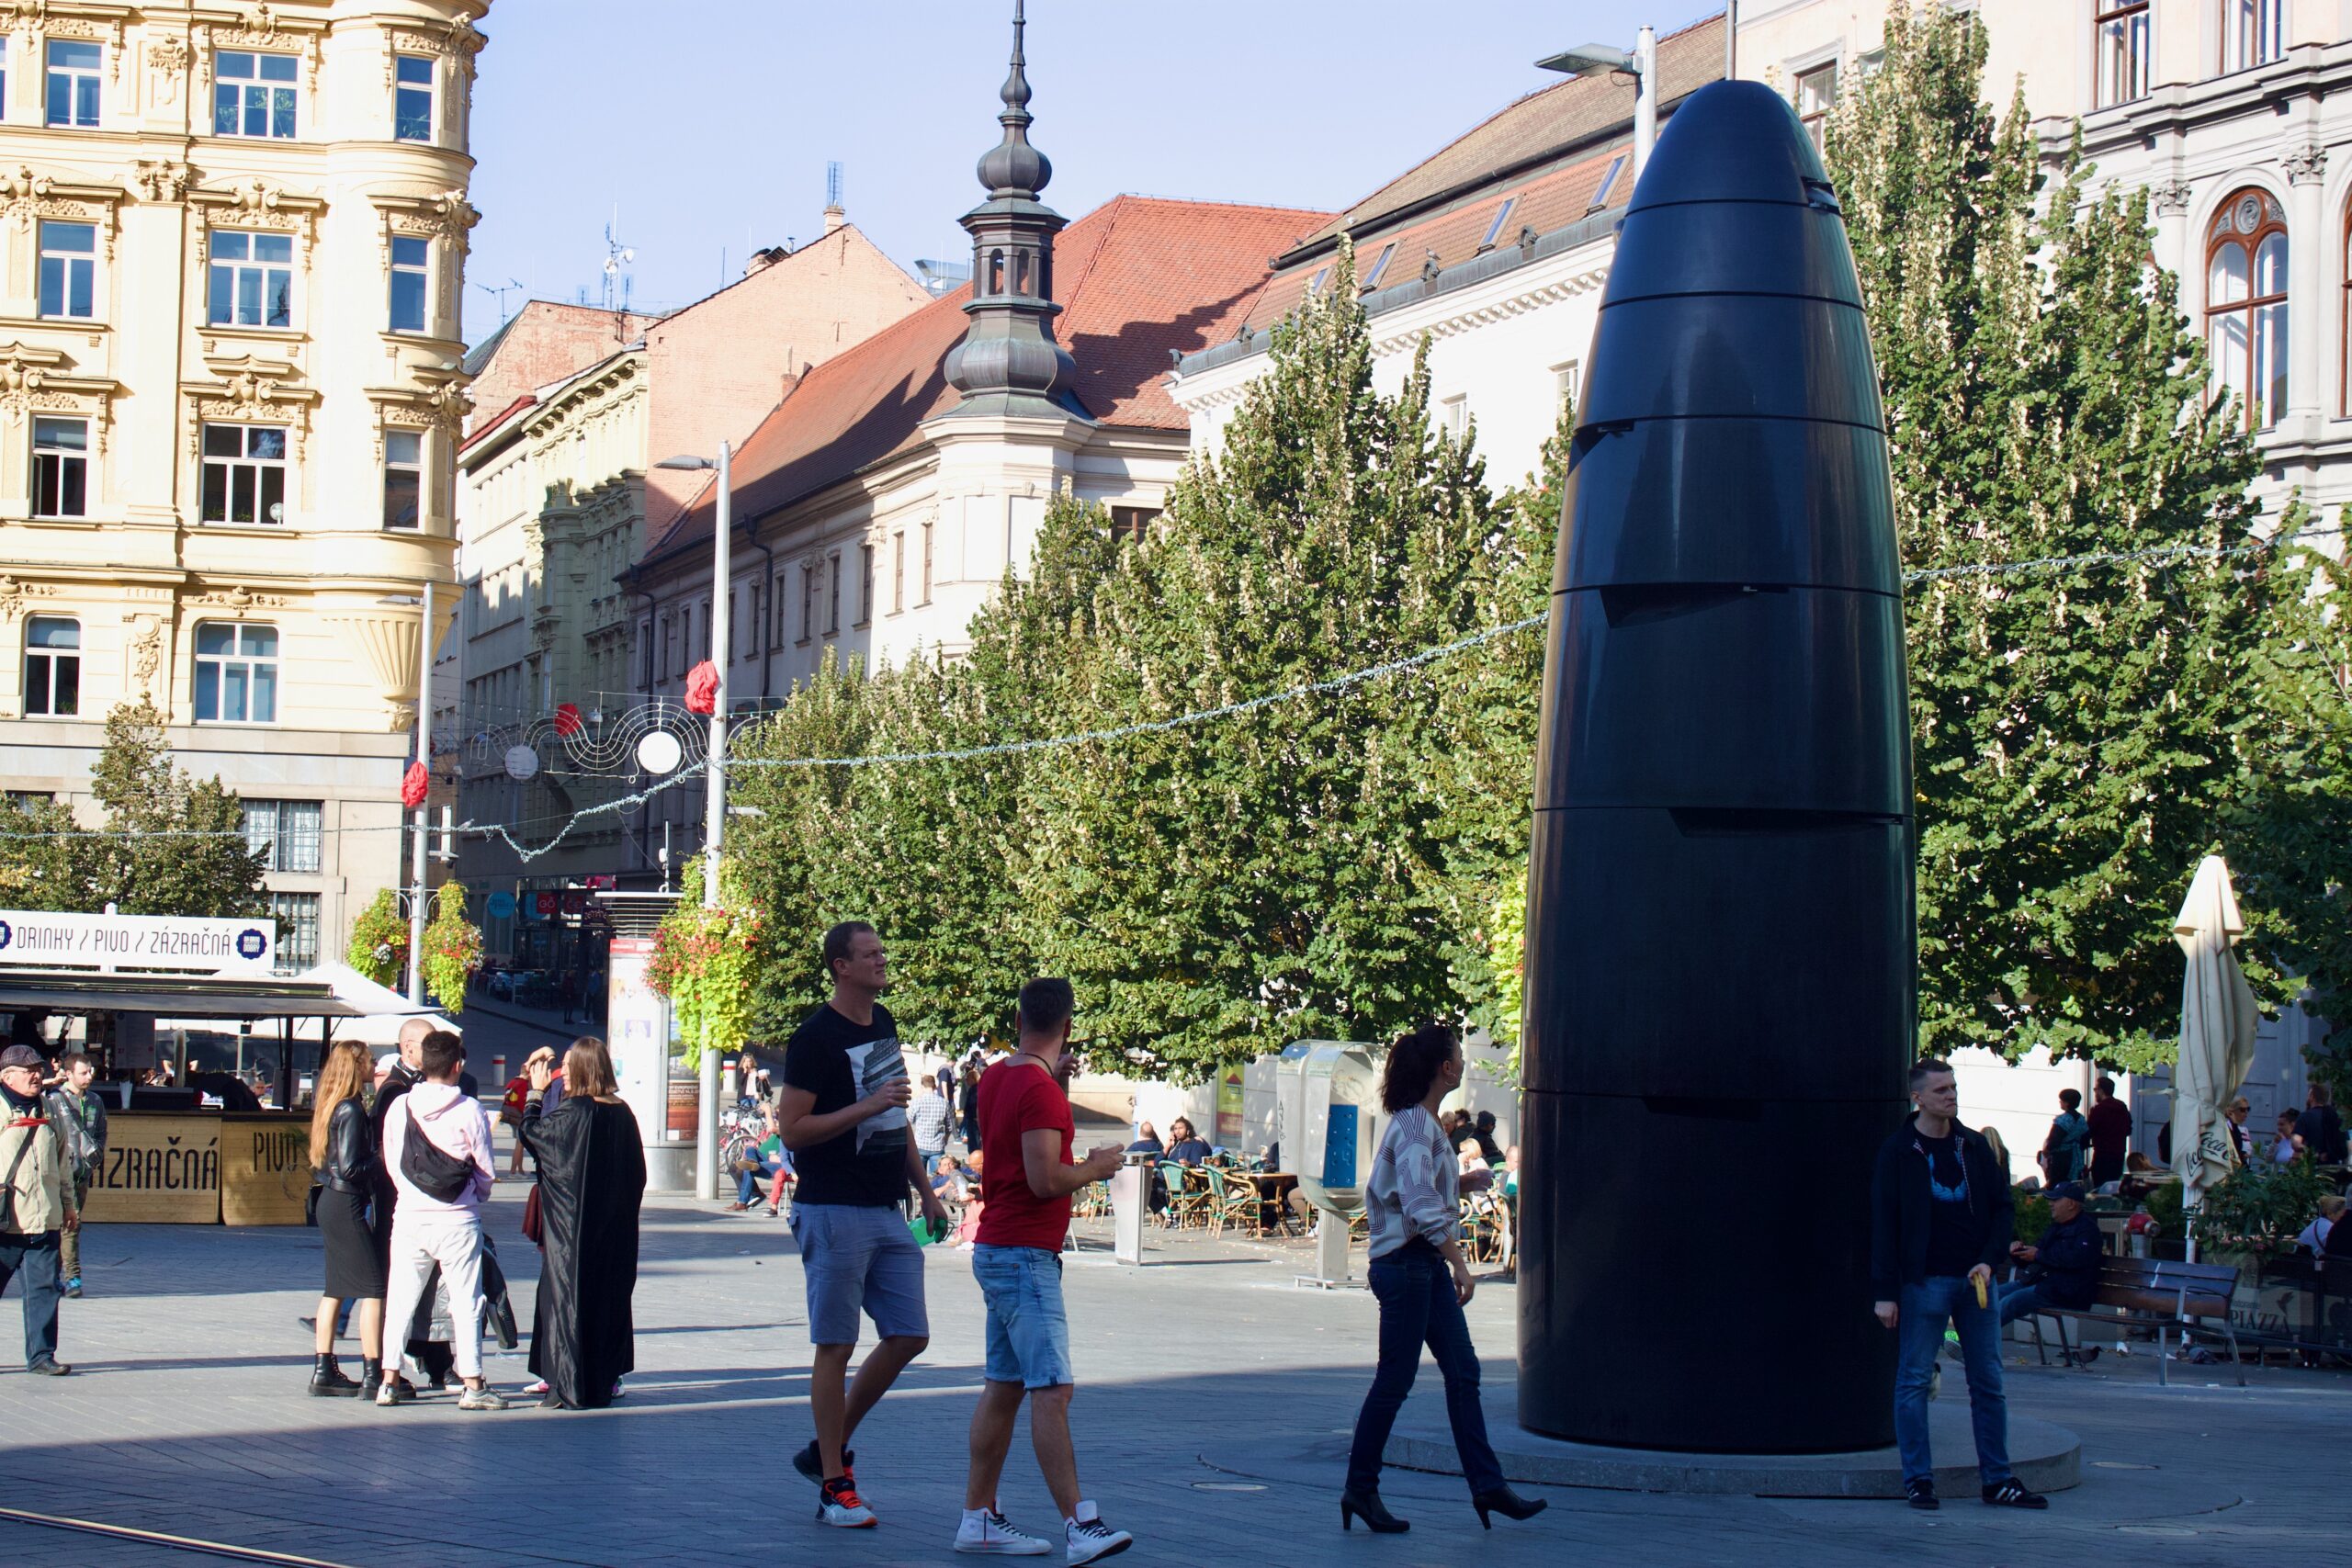 Brno Astronomical Clock - Unusual Places